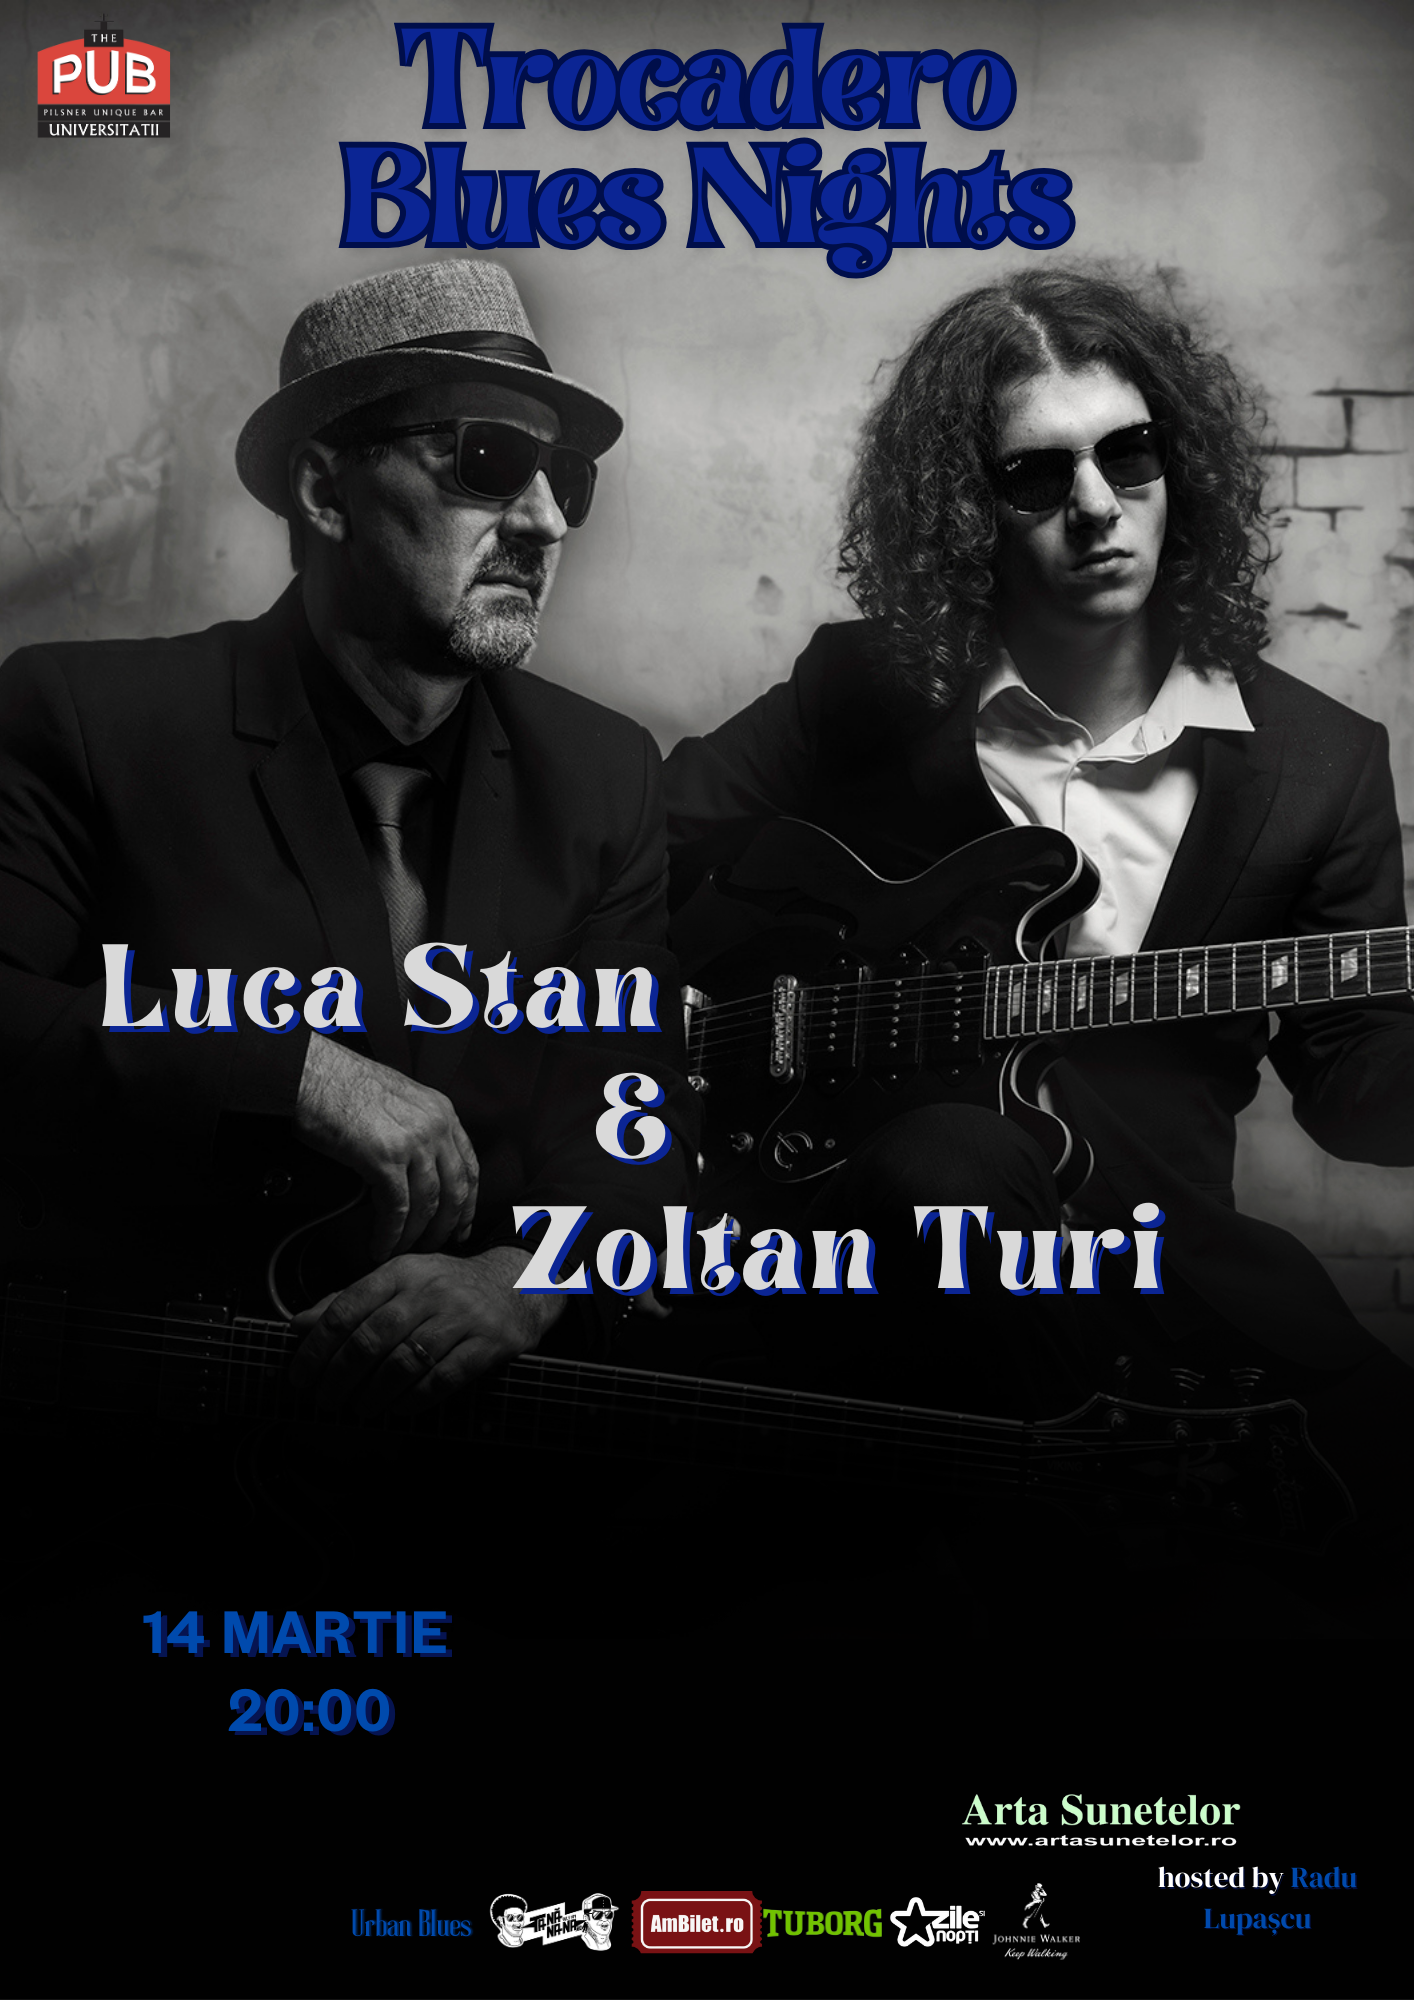 TBN - Luca Stan & Zoltan Turi - Poster.png